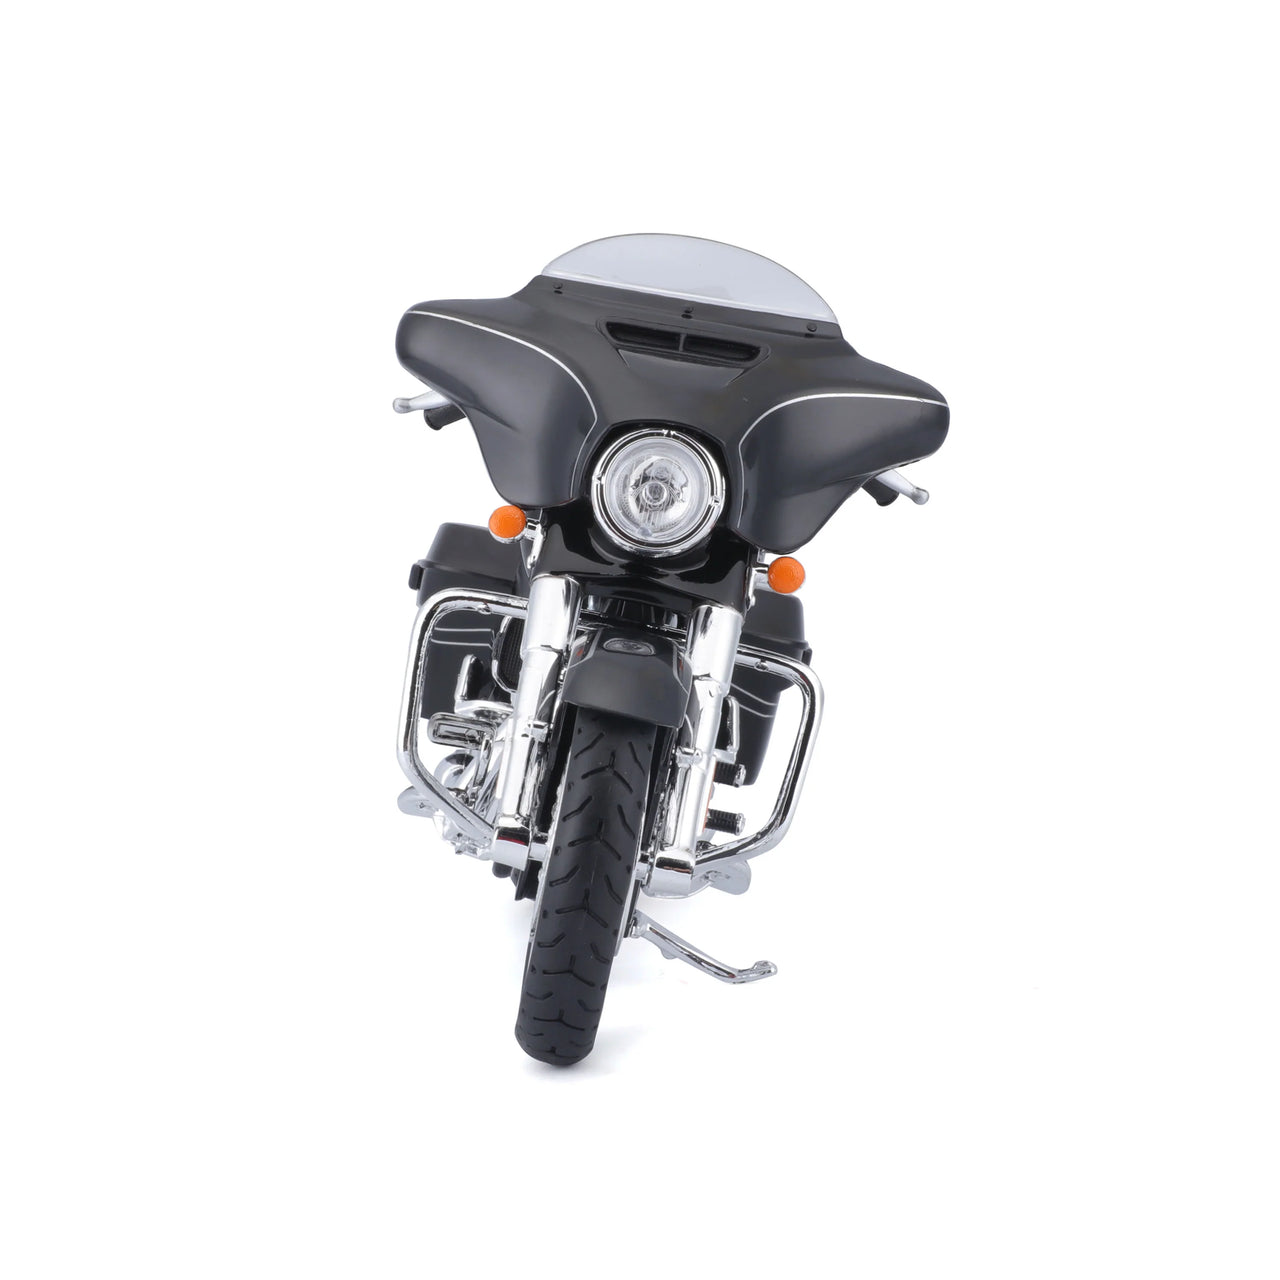 Maisto 1:12 Harley Davidson 2015 Street Glide Bike